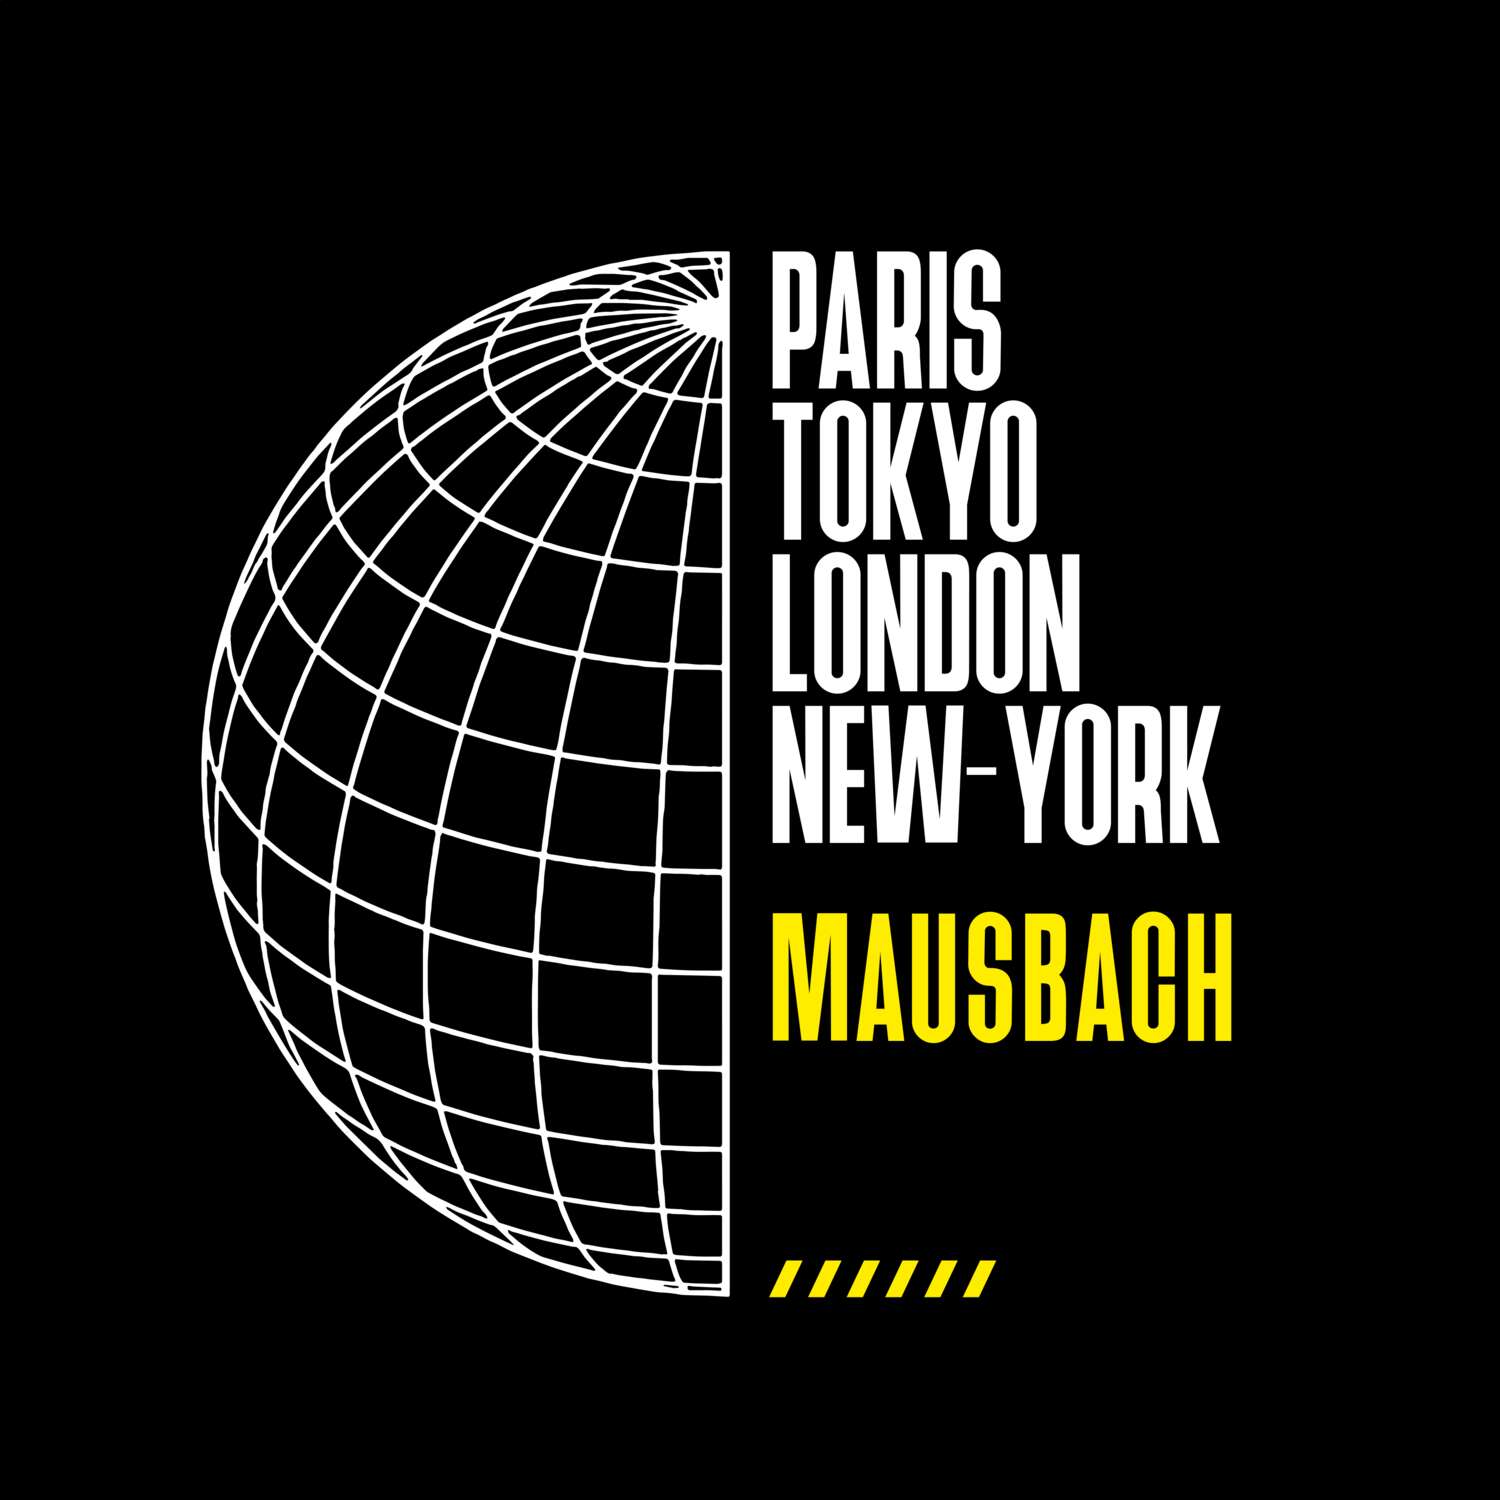 Mausbach T-Shirt »Paris Tokyo London«